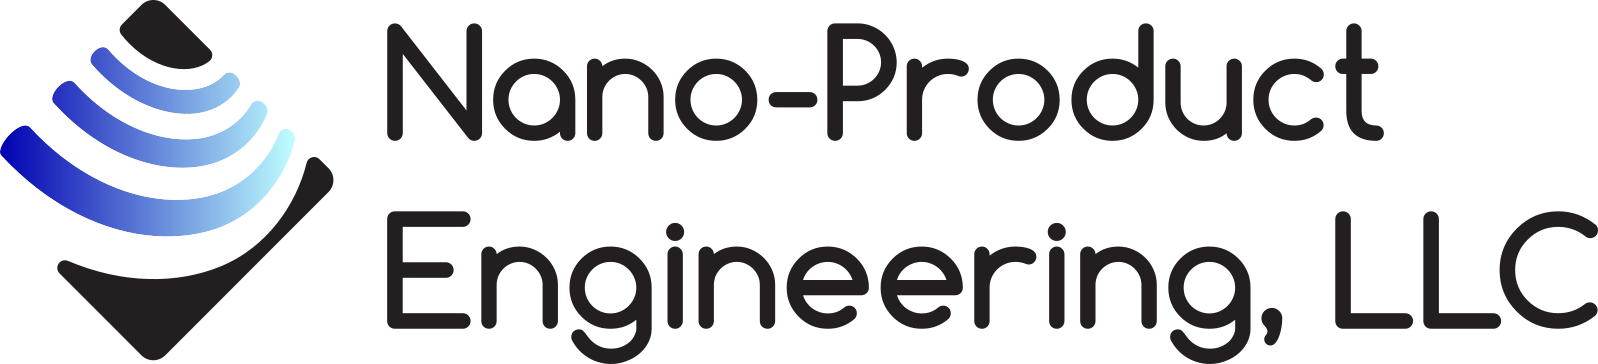 Nano-Product Engineering, LLC